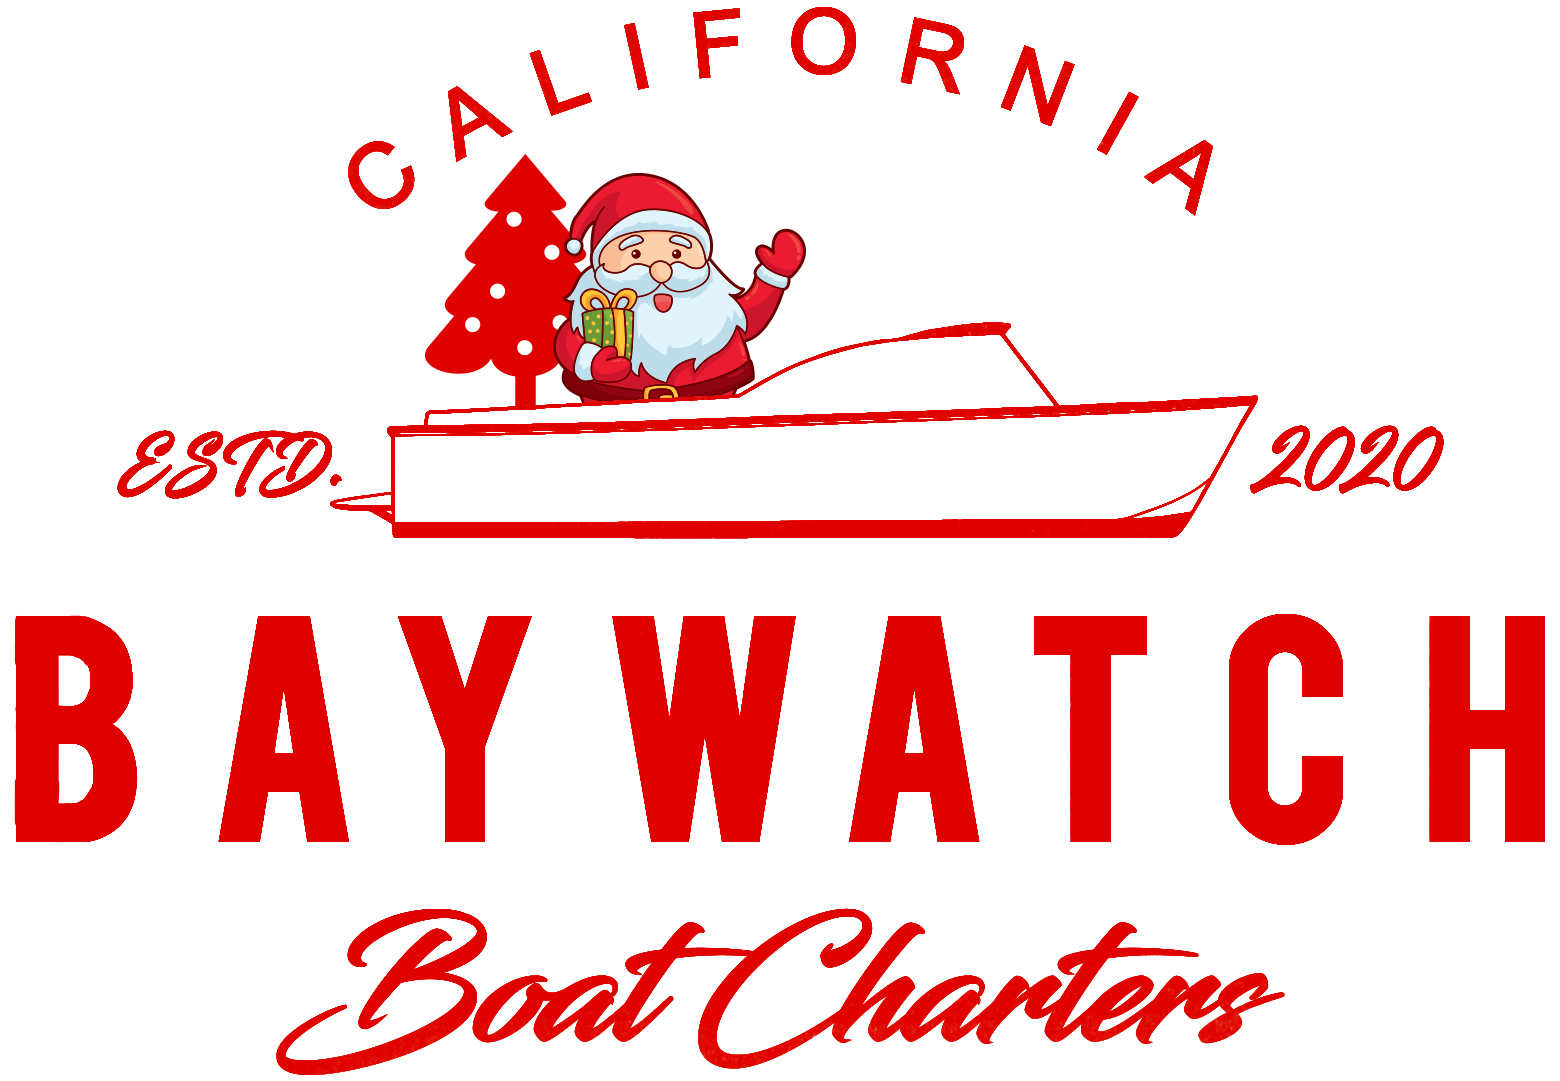 Newport Beach Boat Parade | BayWatch Boat Charters